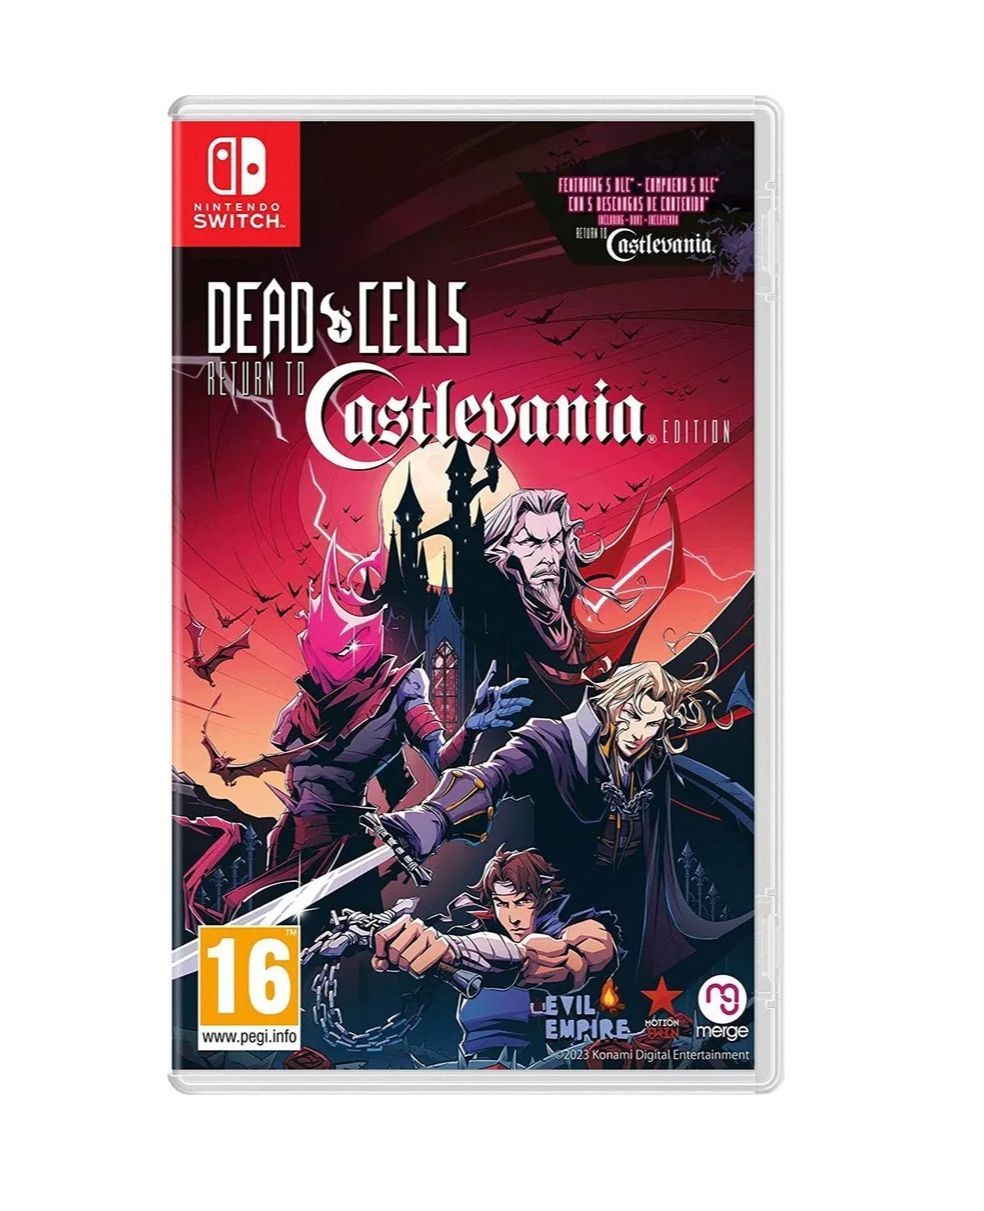 Castlevania nintendo. Dead Cells Return to Castlevania. Dead Cells - Return to Castlevania Edition. Dead Cells (Nintendo Switch). Dead Cells Return to Castlevania background.